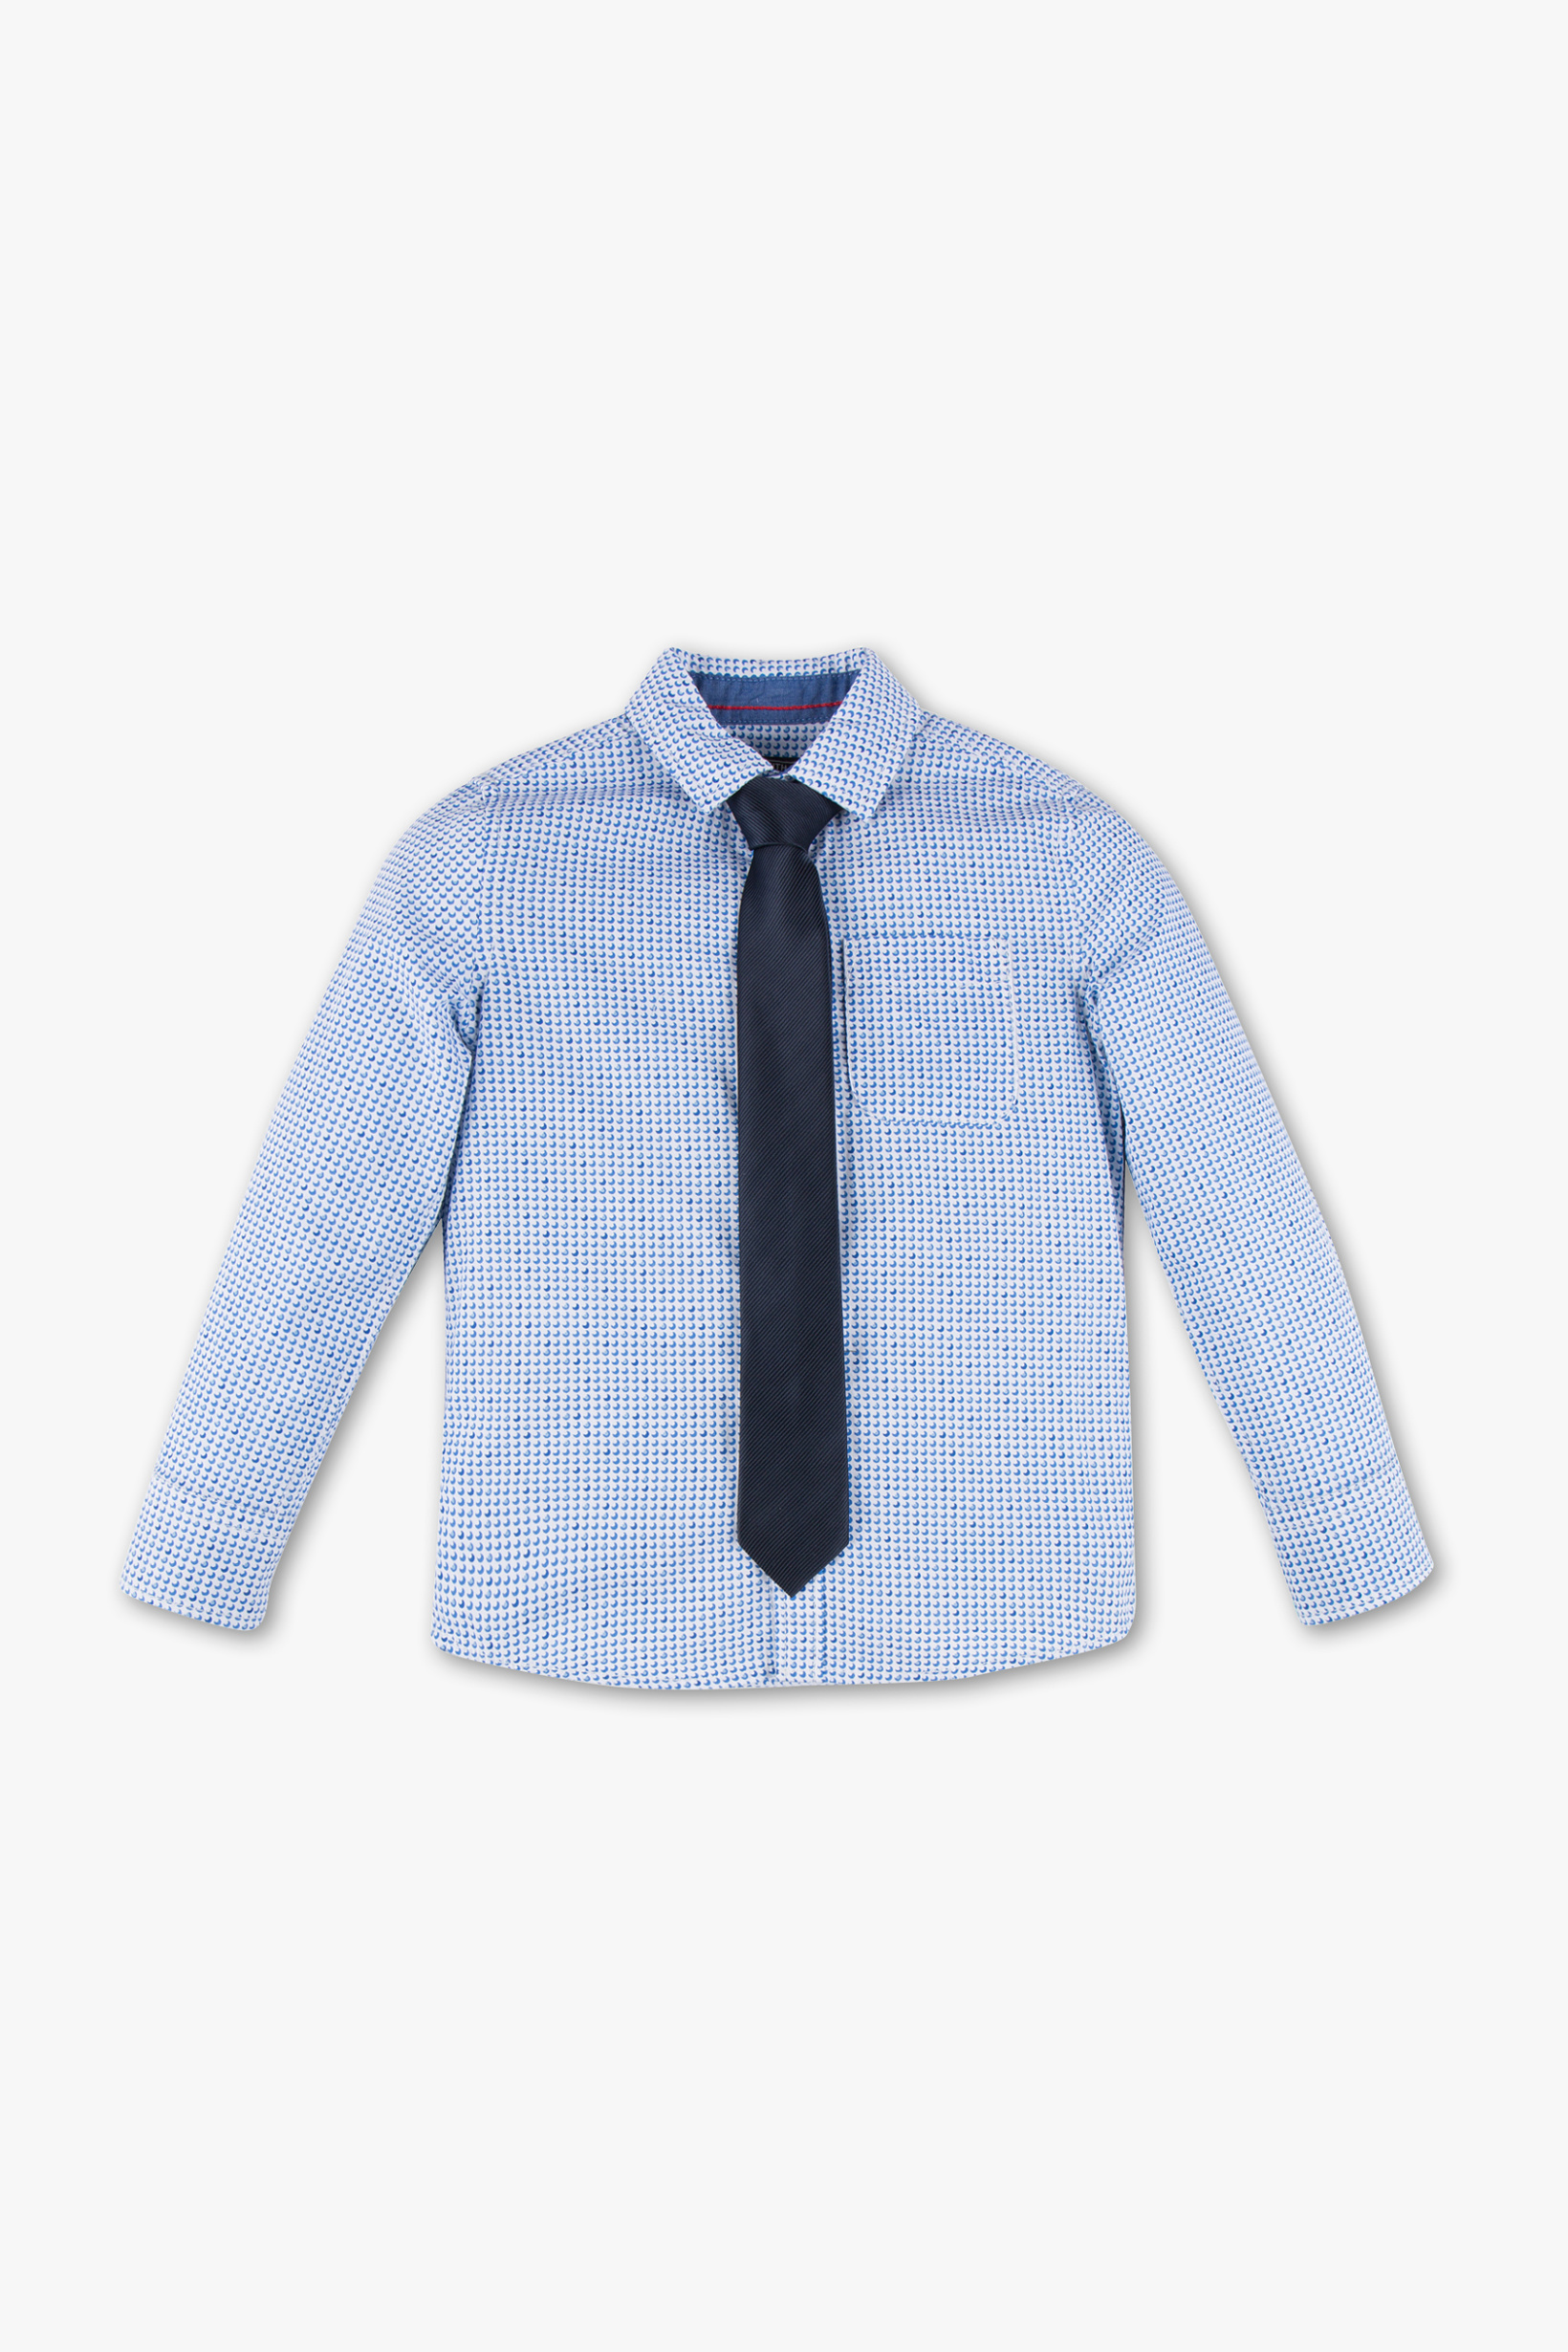 Palomino Set overhemd met stropdas biokatoen